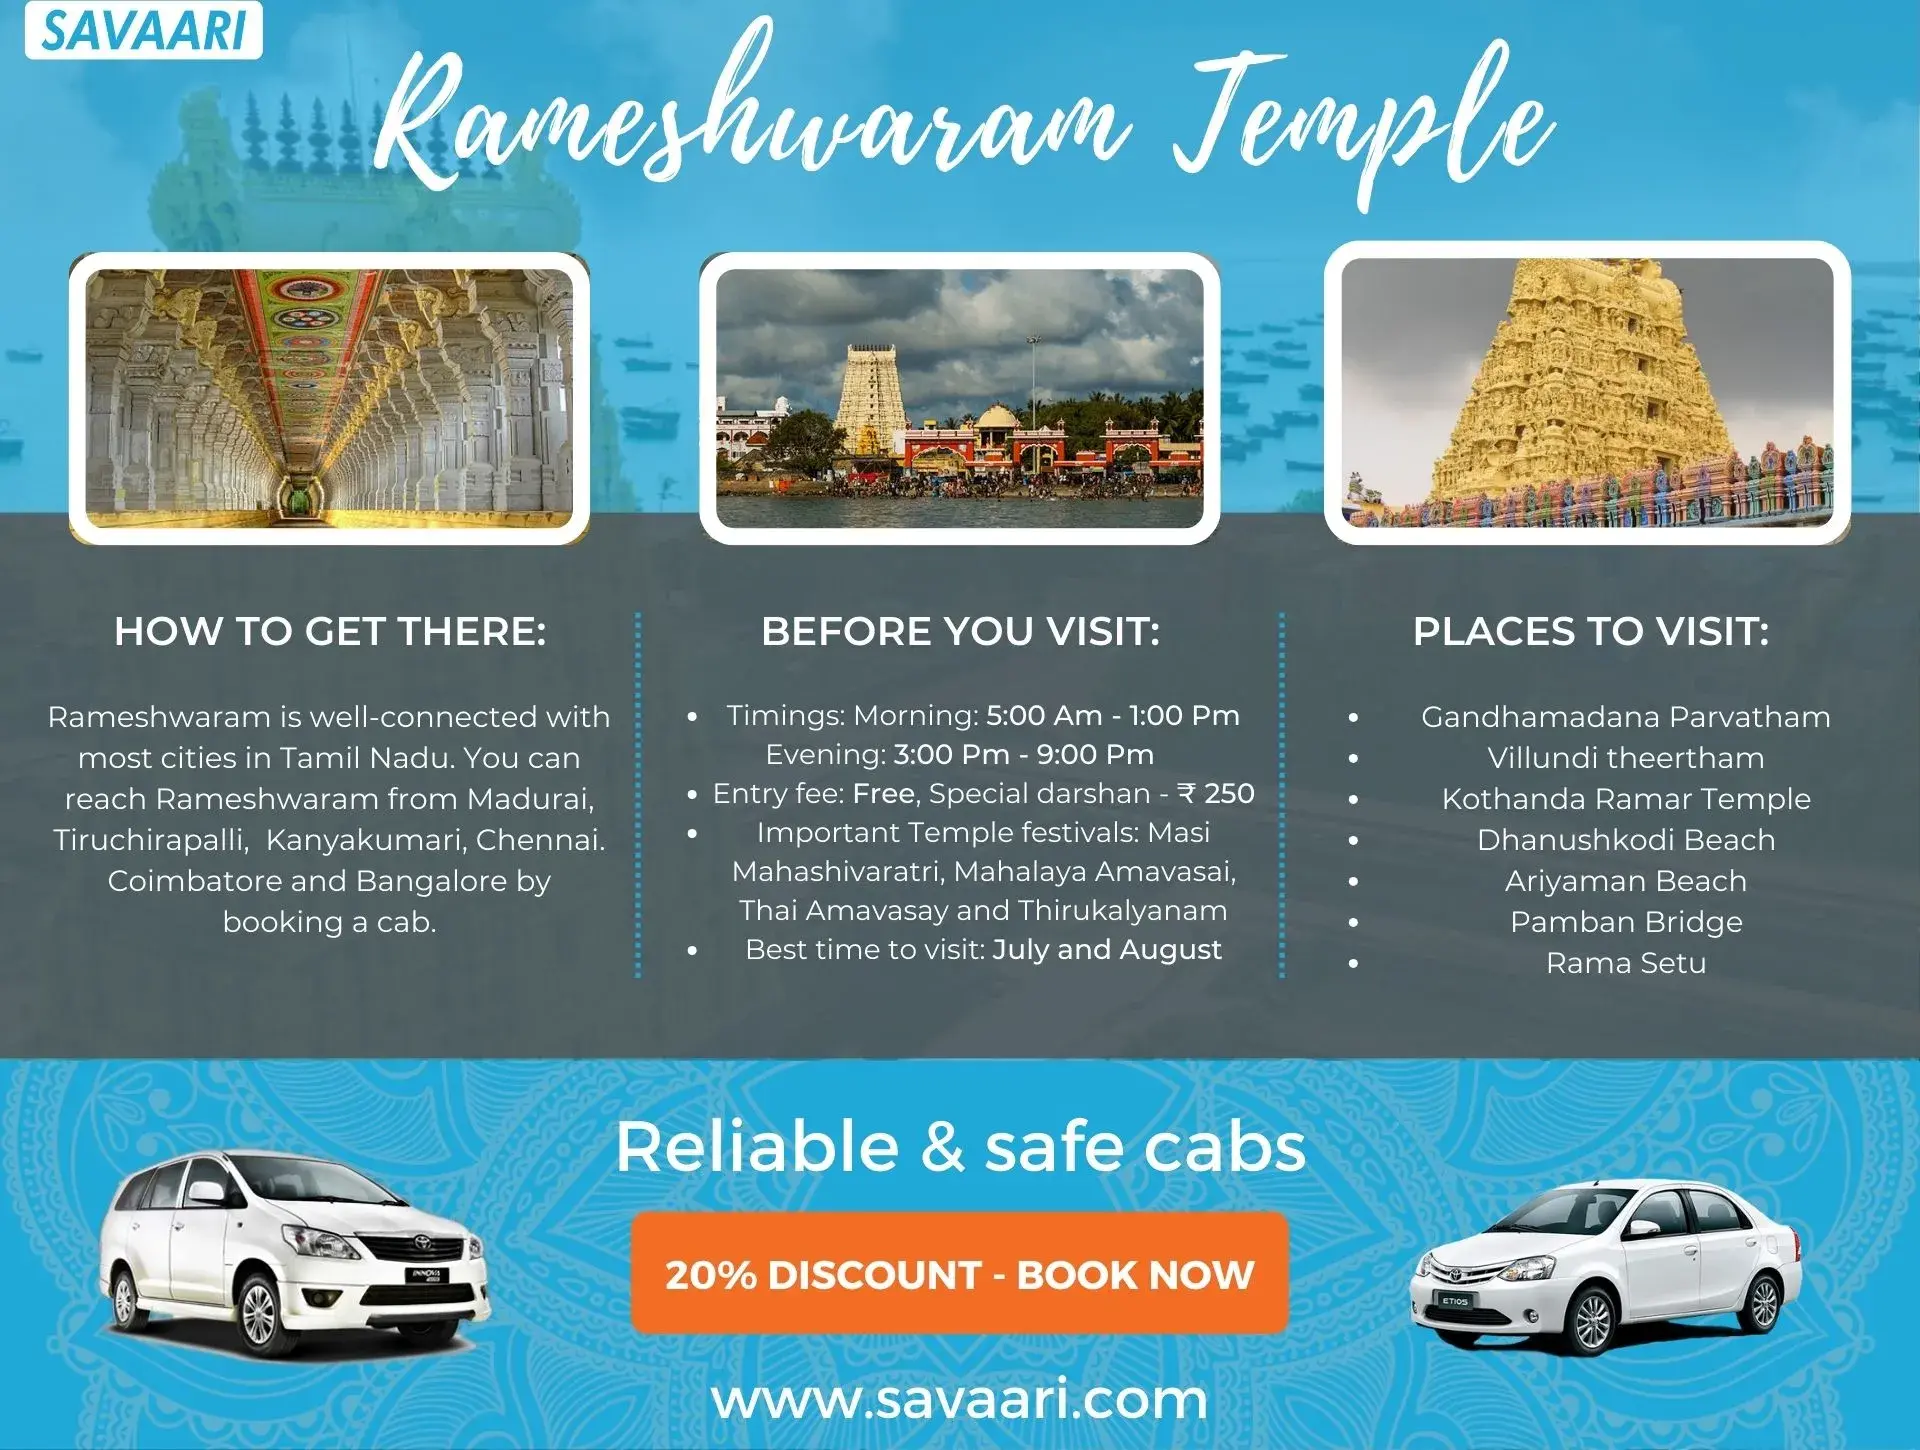 Madurai to Rameshwaram Temple info